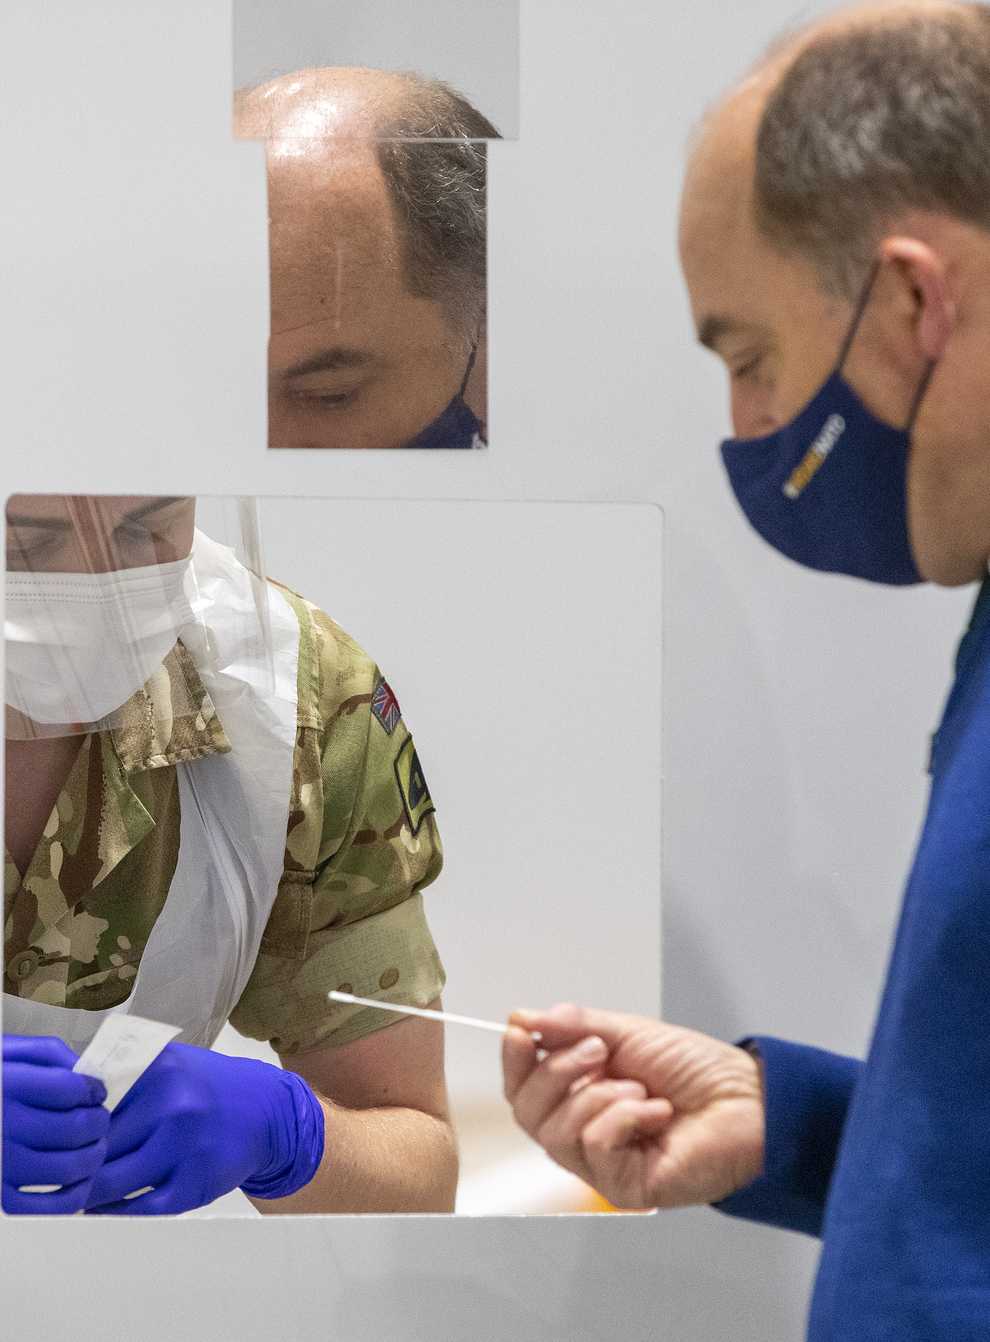 Liverpool is undertaking a mass coronavirus testing pilot